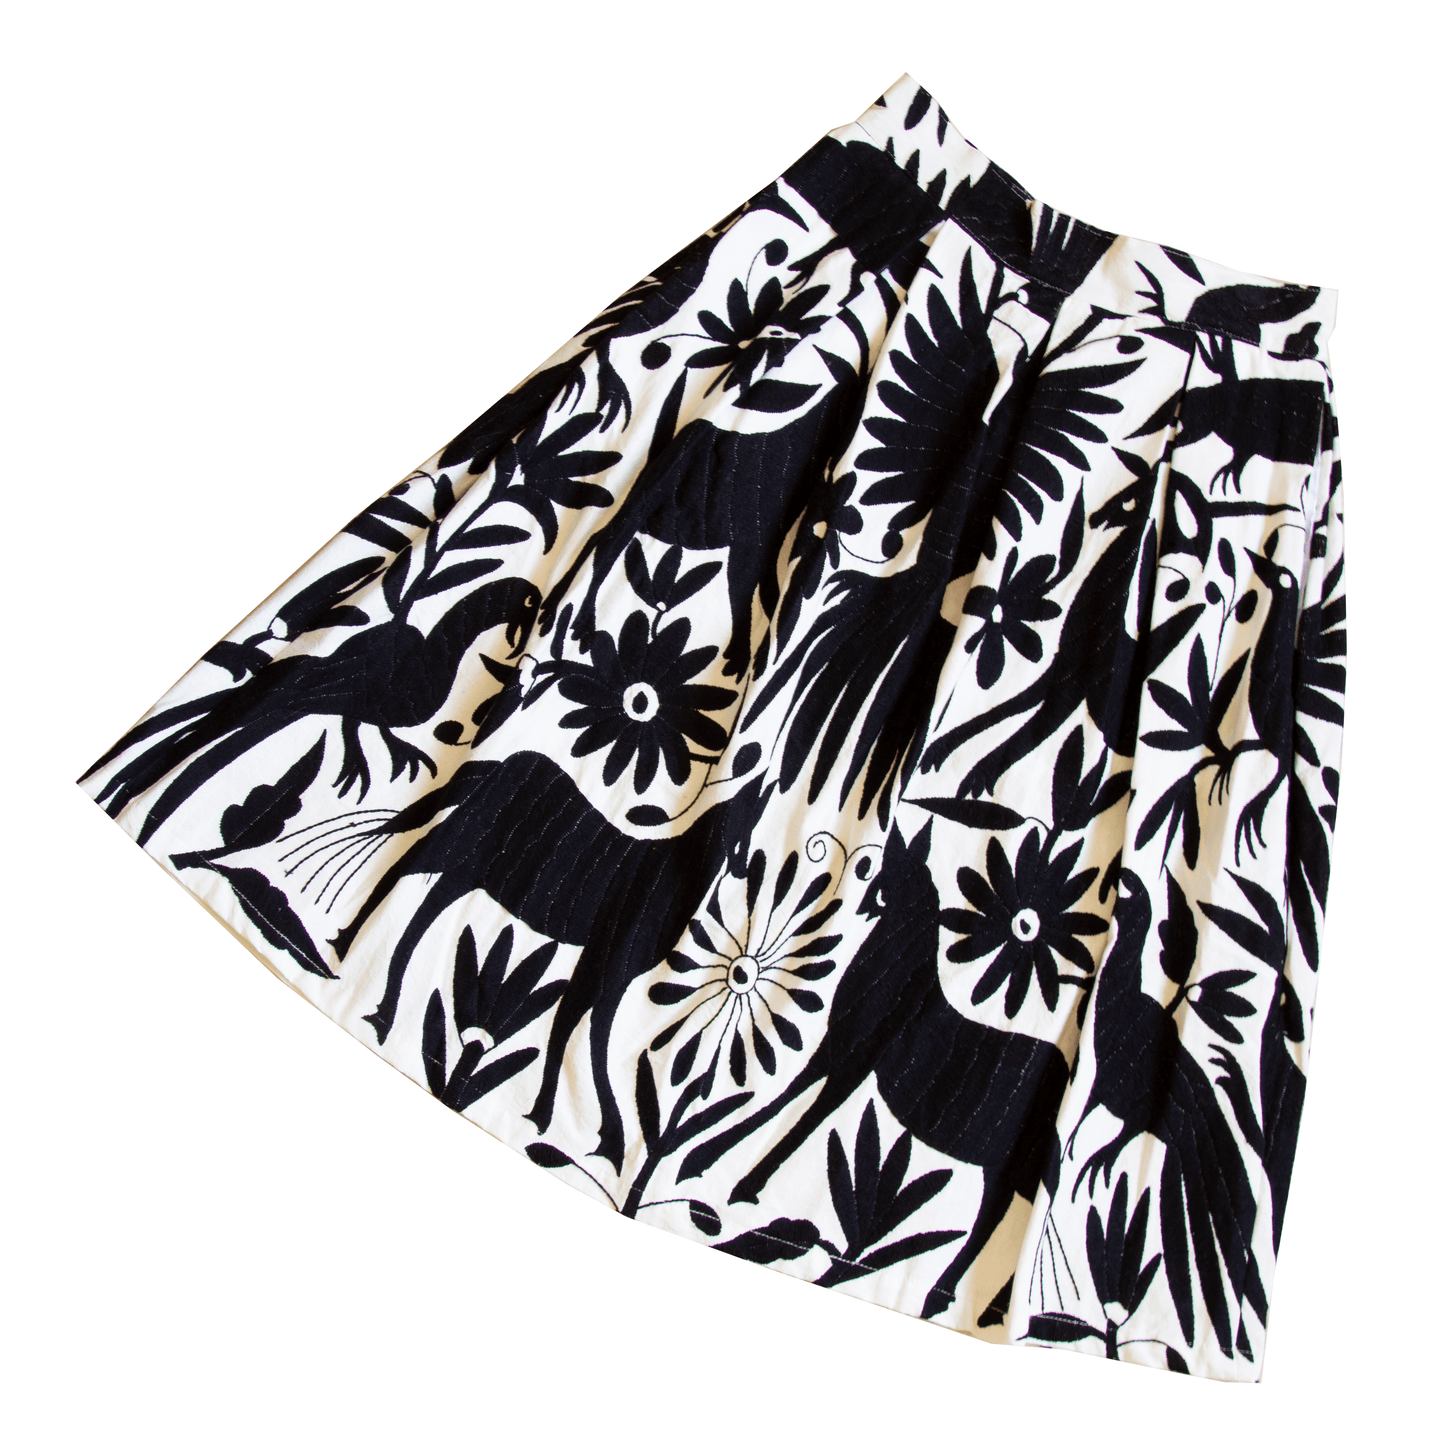 Embroidered Otomi Skirt